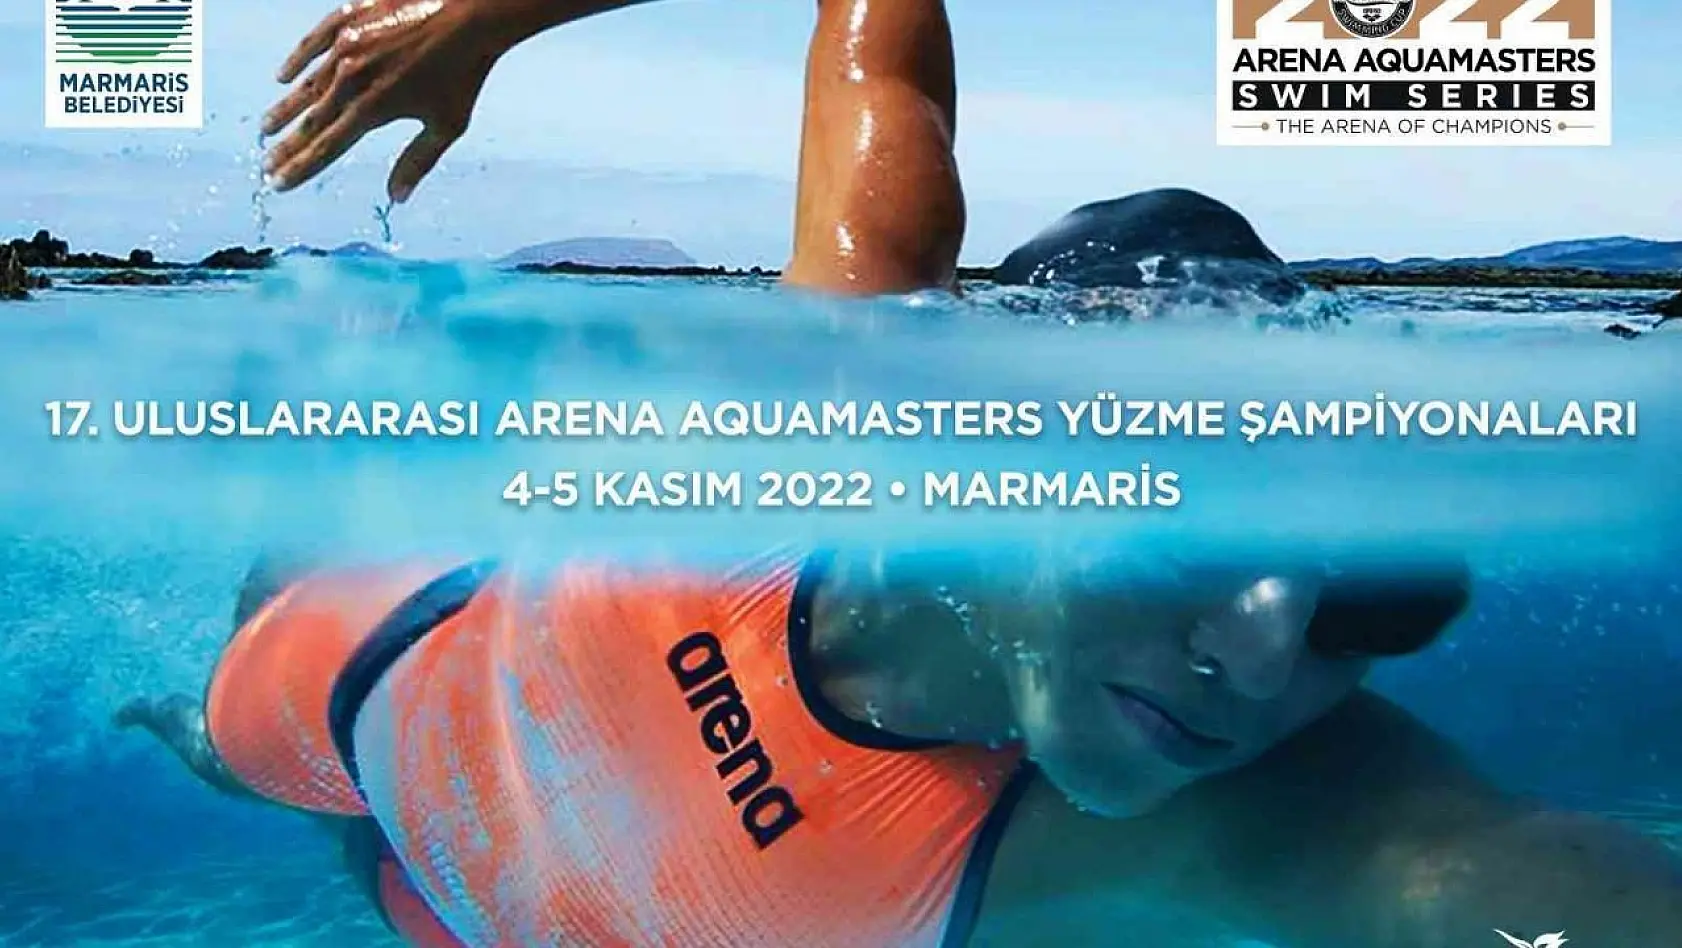 Aqua Masters yüzme yarışlarına Marmaris ev sahipliği yapacak